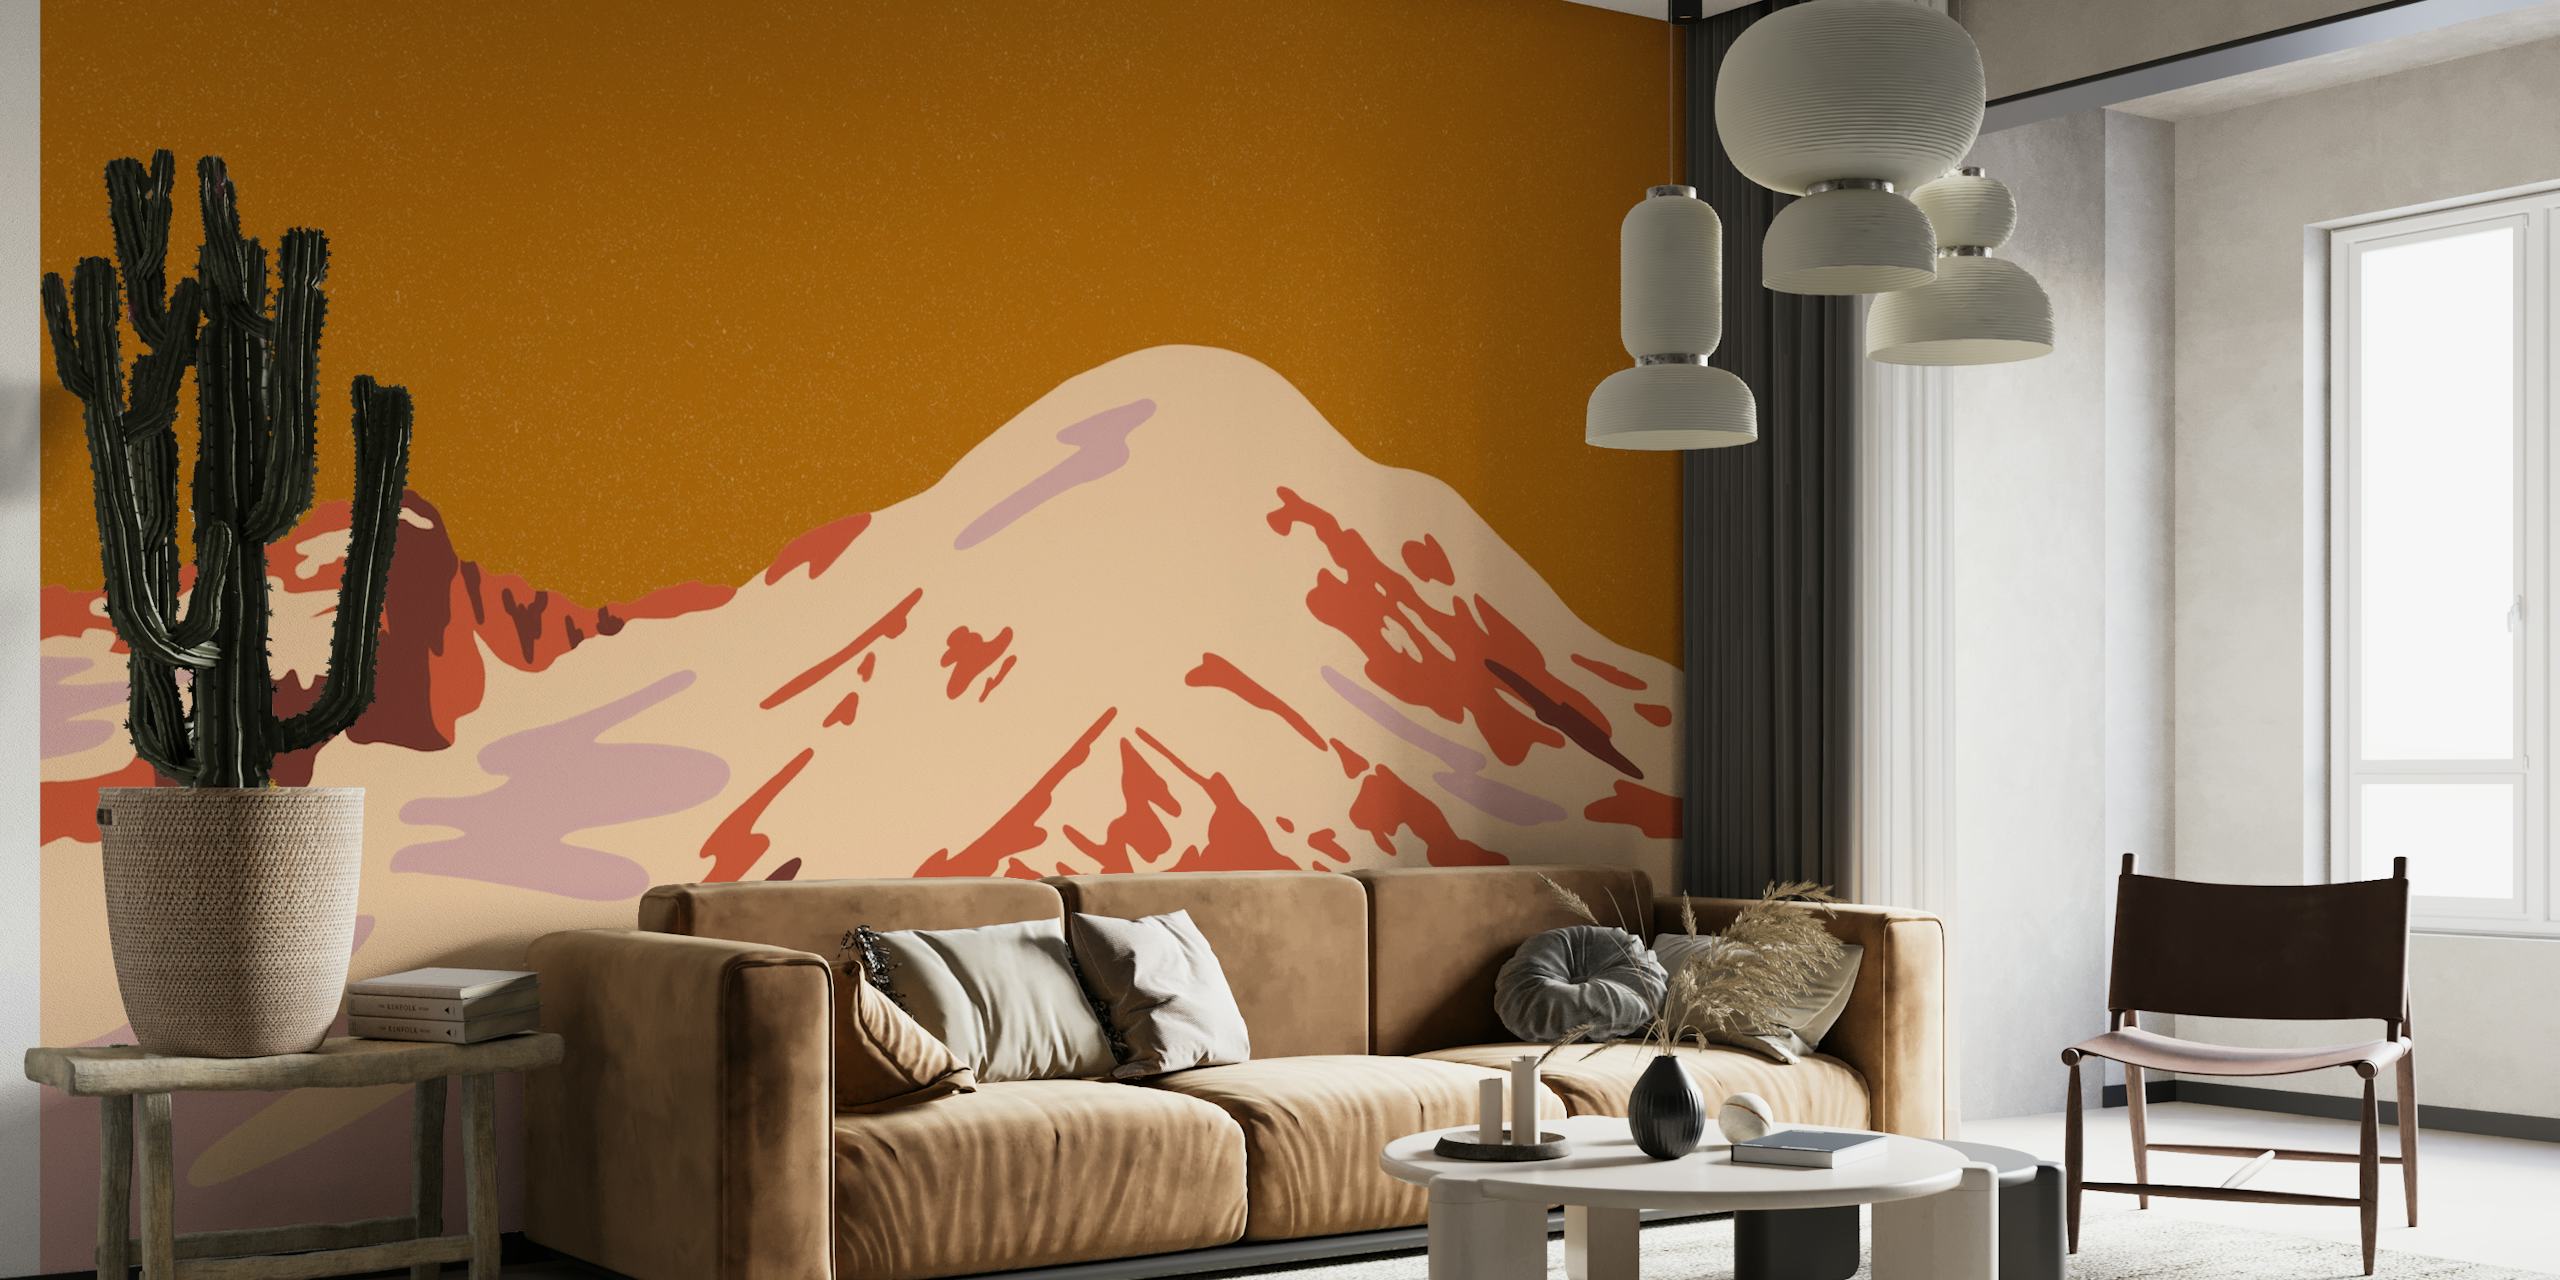 Mount Rainier at Sunrise wall mural depicting the snow-capped peak in warm sunrise hues